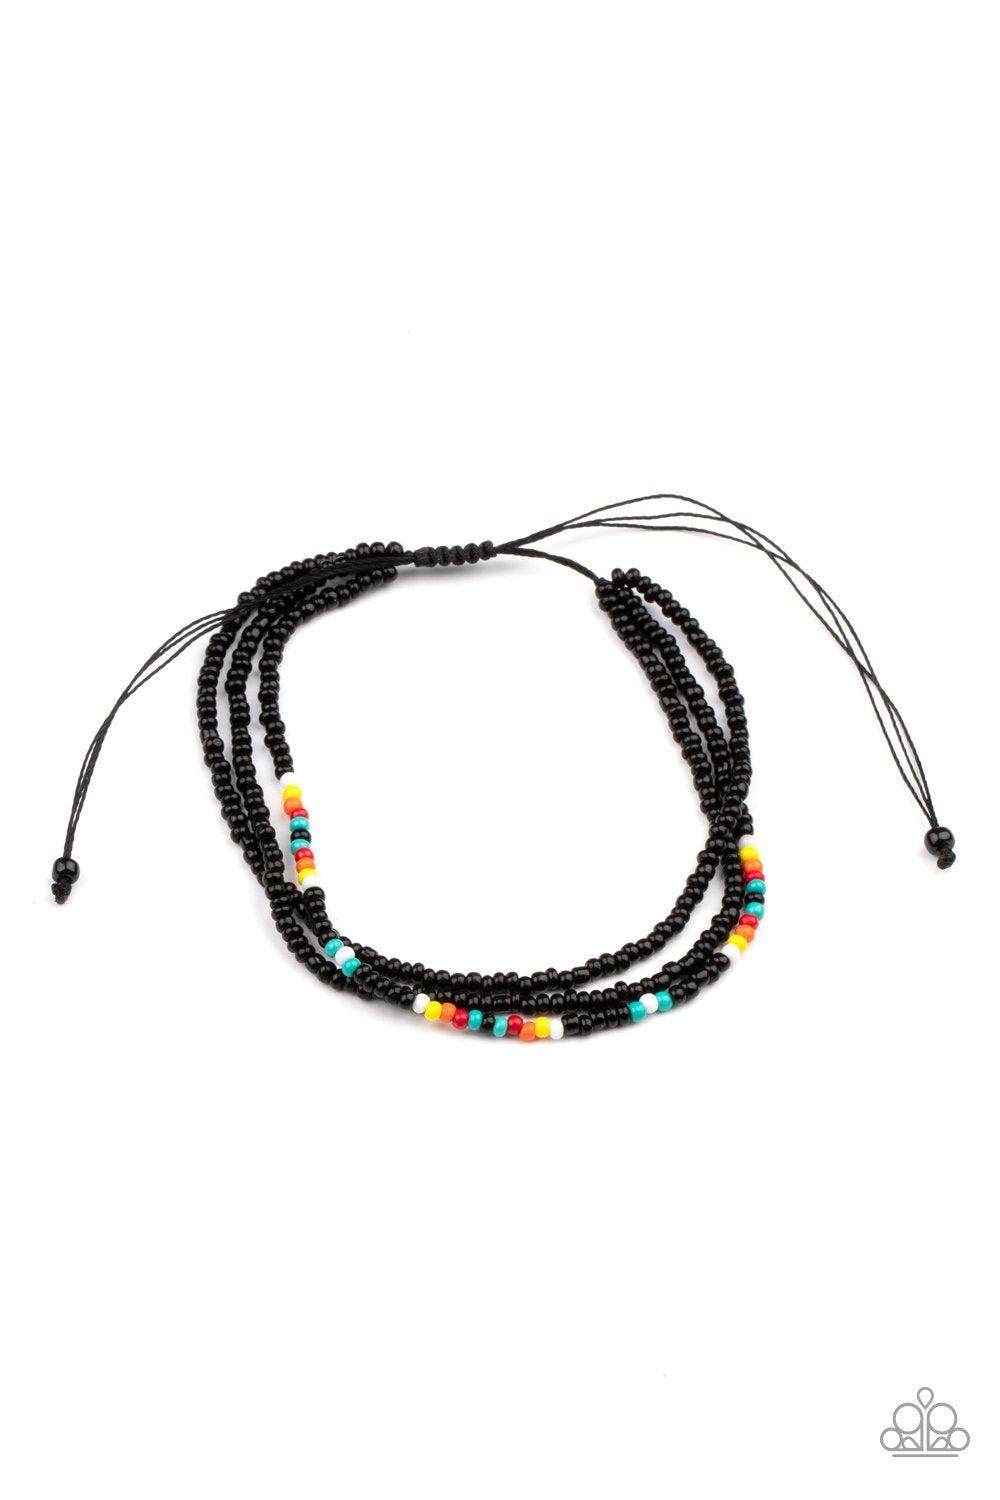 Basecamp Boyfriend Black &amp; Multi Seed Bead Sliding Knot Bracelet - Paparazzi Accessories- lightbox - CarasShop.com - $5 Jewelry by Cara Jewels